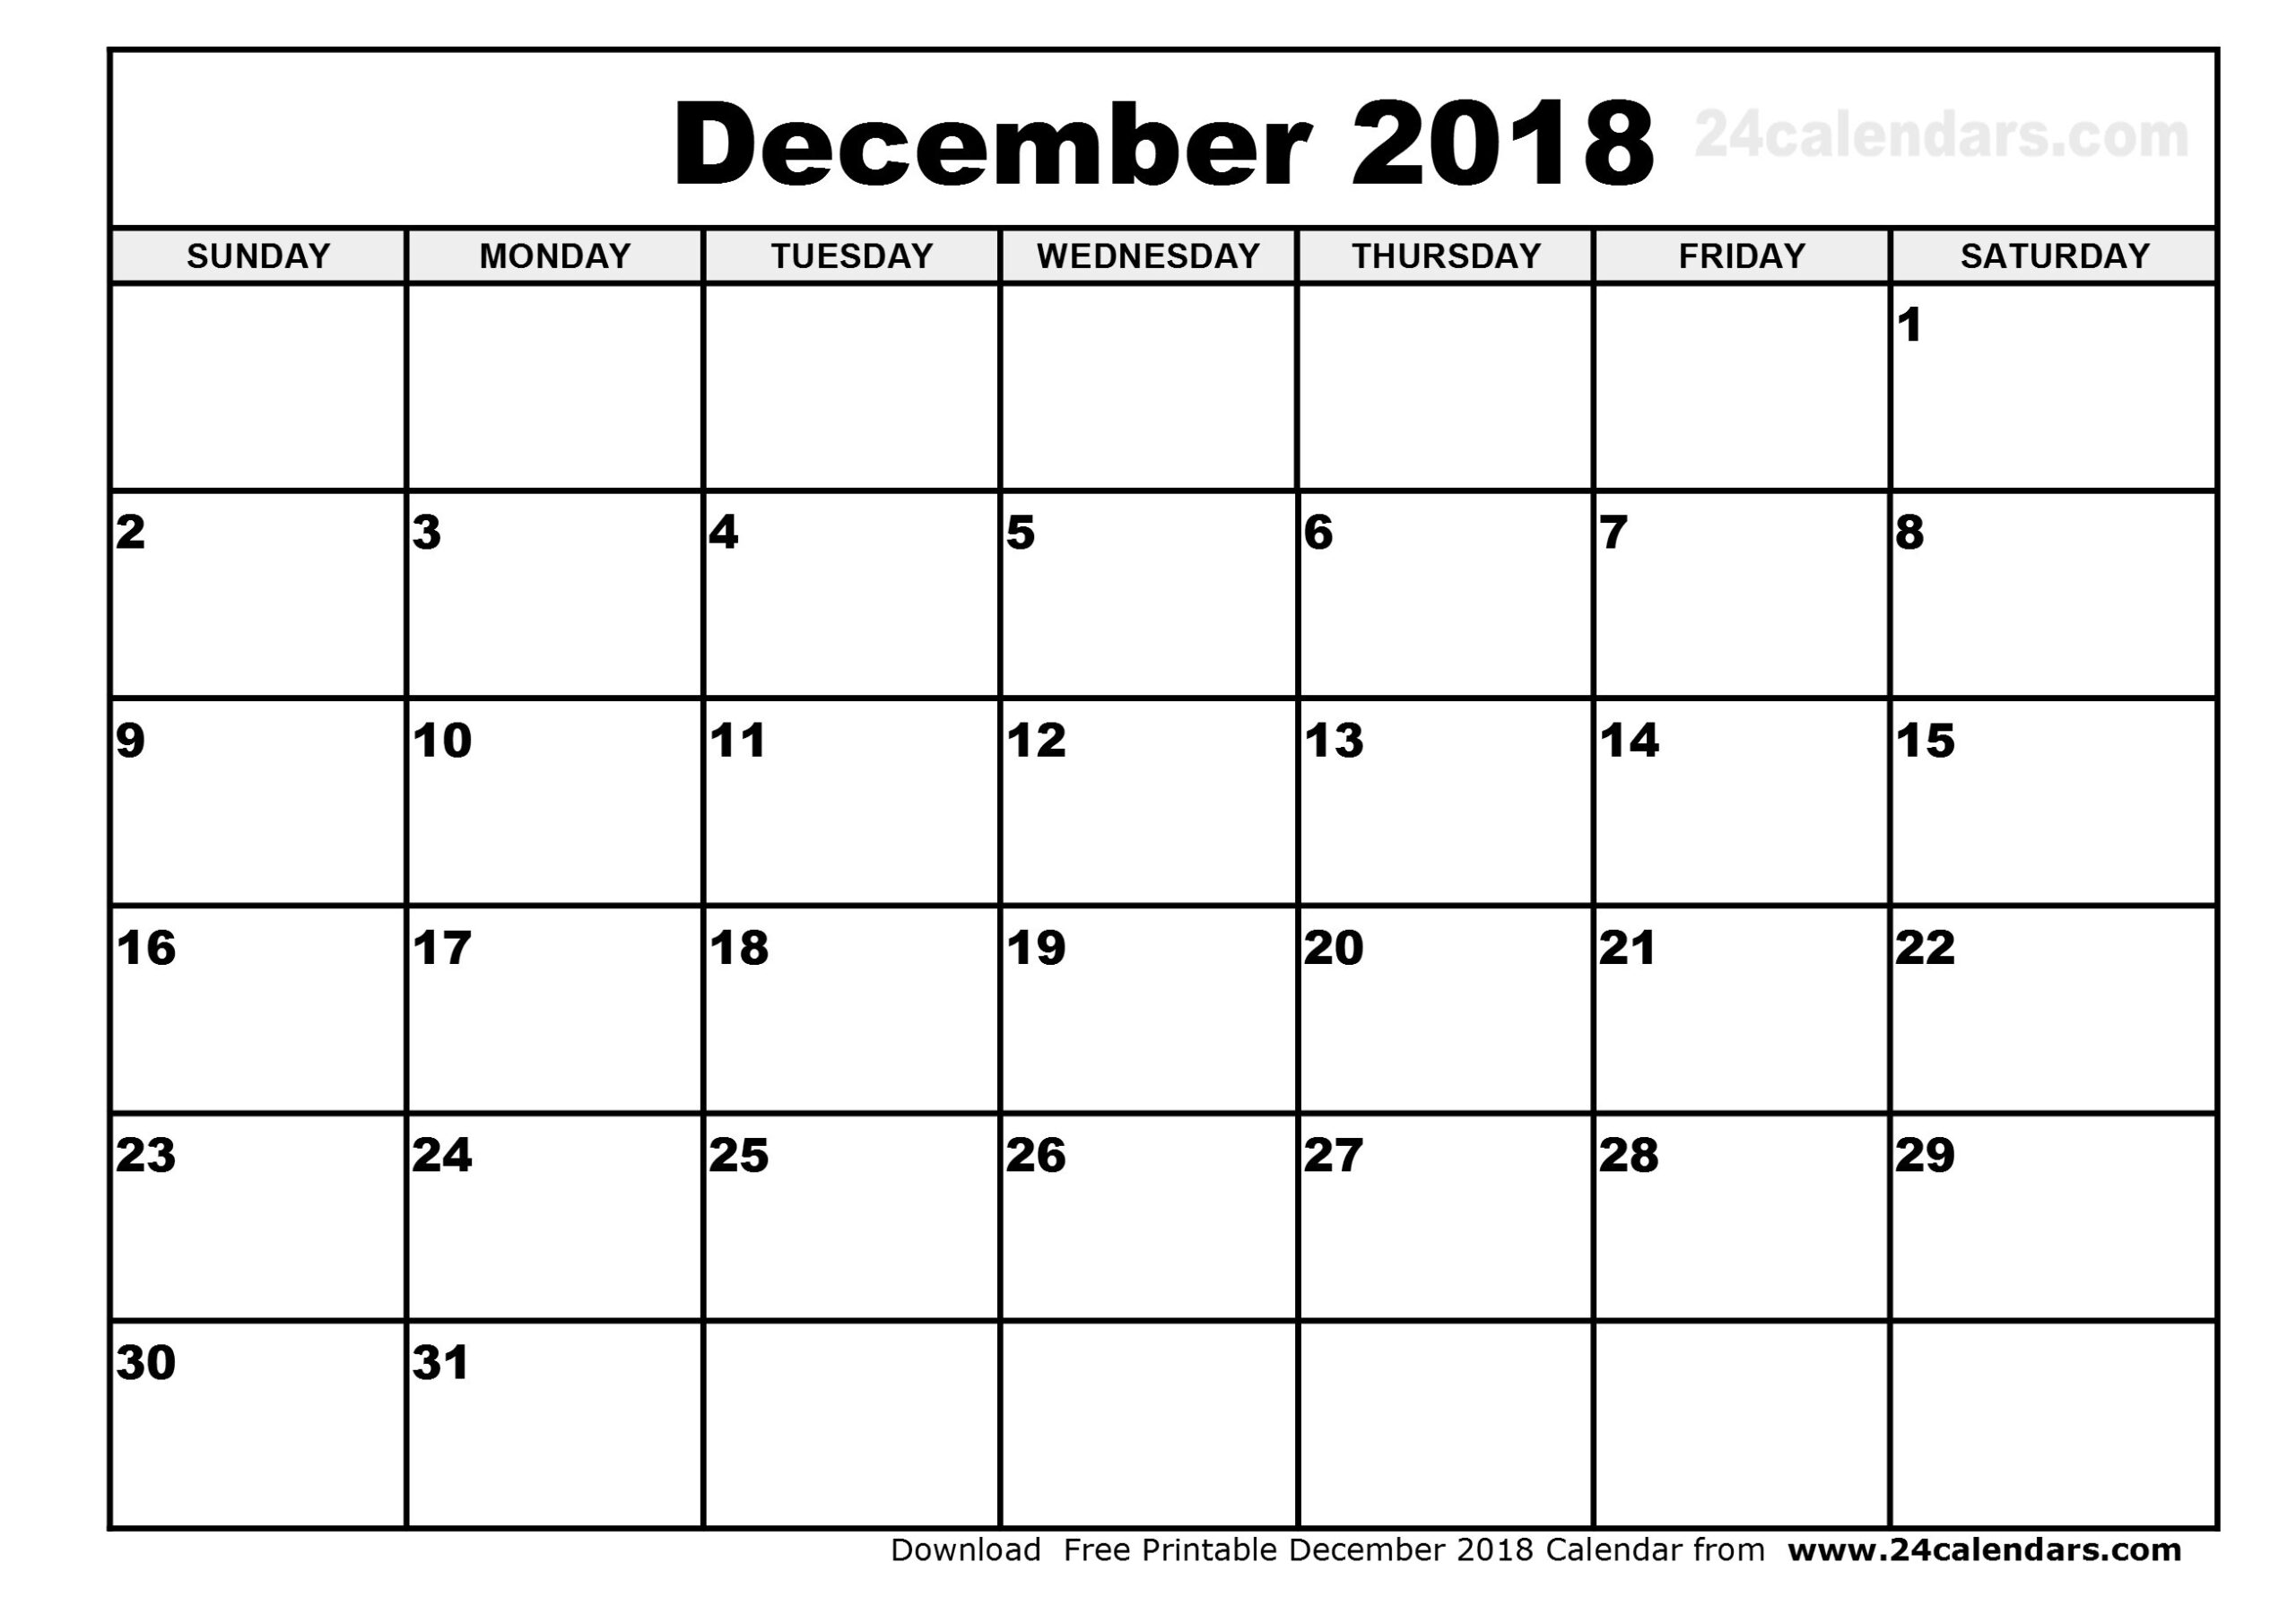 Monthly Calendars Monday Through Friday - Calendar Inspiration Design